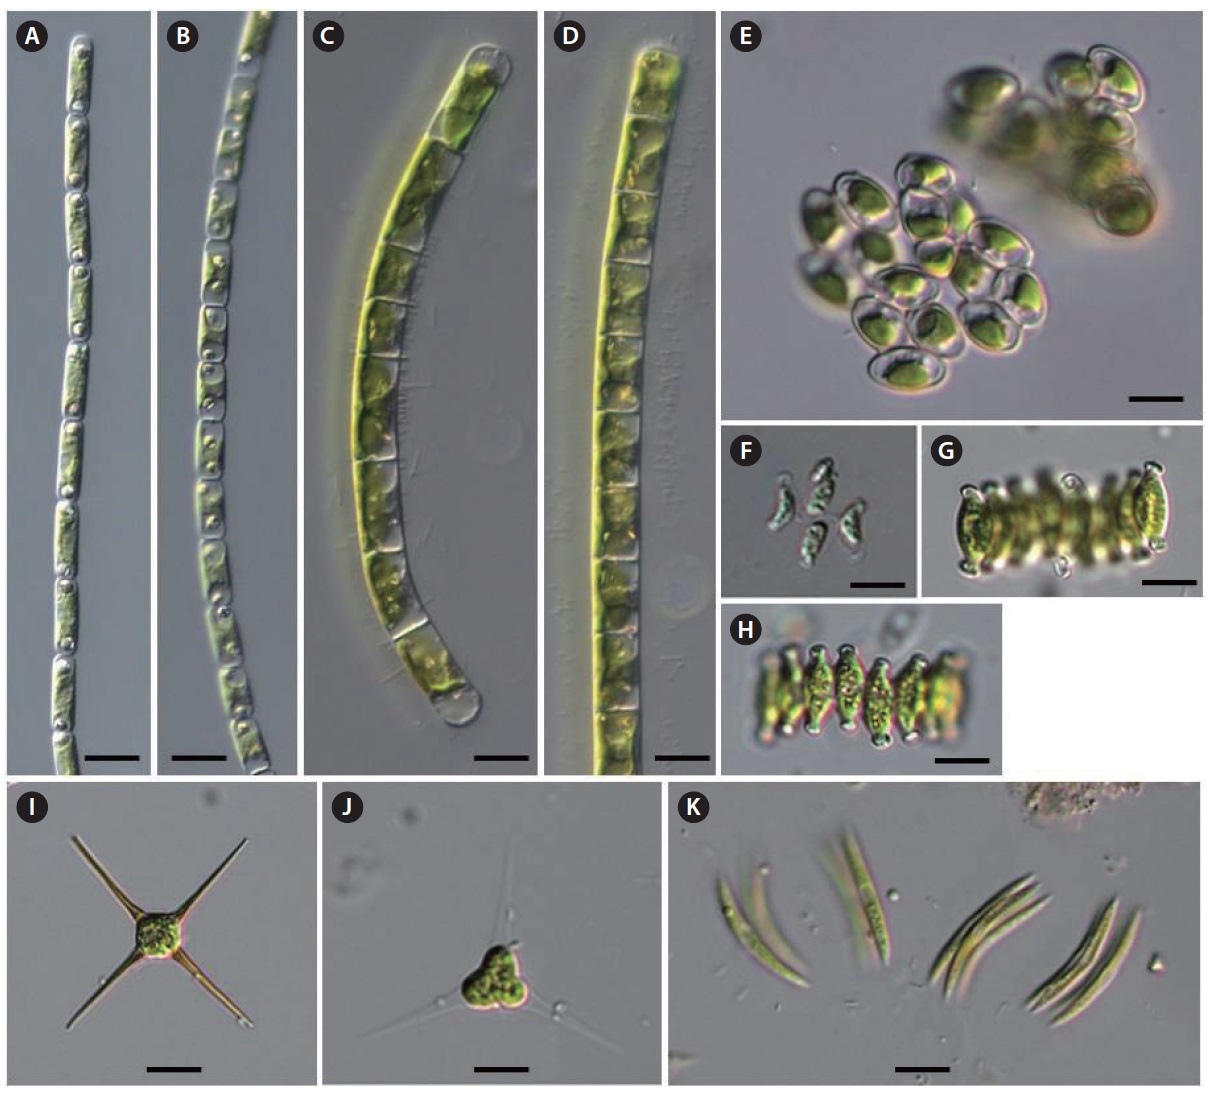 (A, B) Gloeotila pulchra, (C, D) Gloeotilopsis planktonica, (E) Tetrachlorella alternans, (F) Scenedesmus indicus, (G, H) S. product-capitatus, (I) Treubaria quadrispina, (J) T. setigera, (K) Quadrigula closterioides. Scale bars, 10 μm.